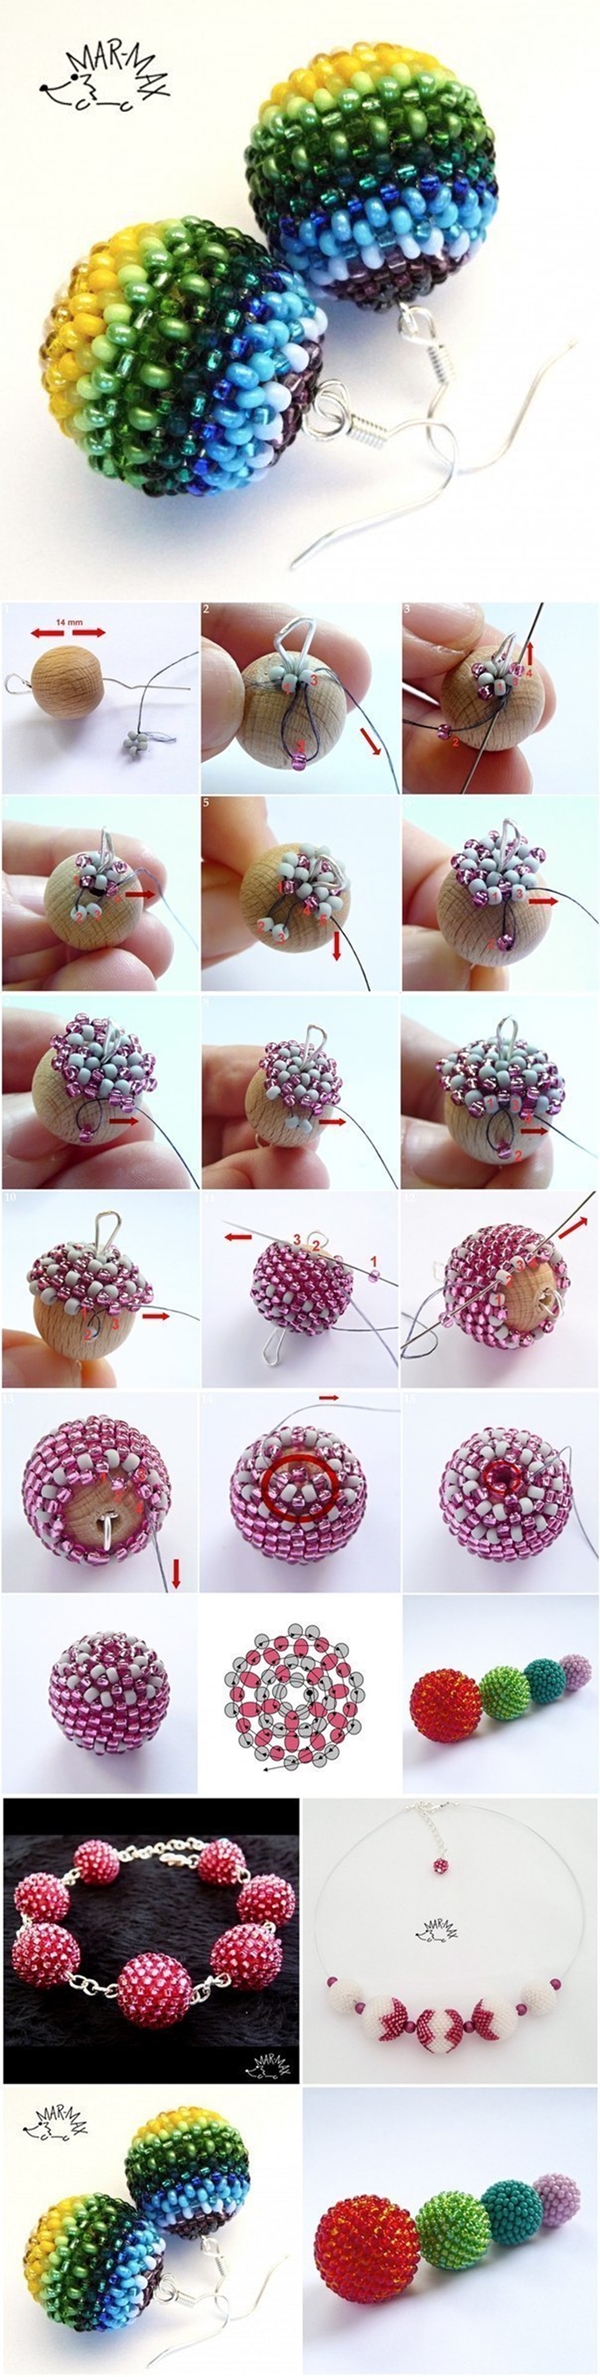 bead ball earring tutorial